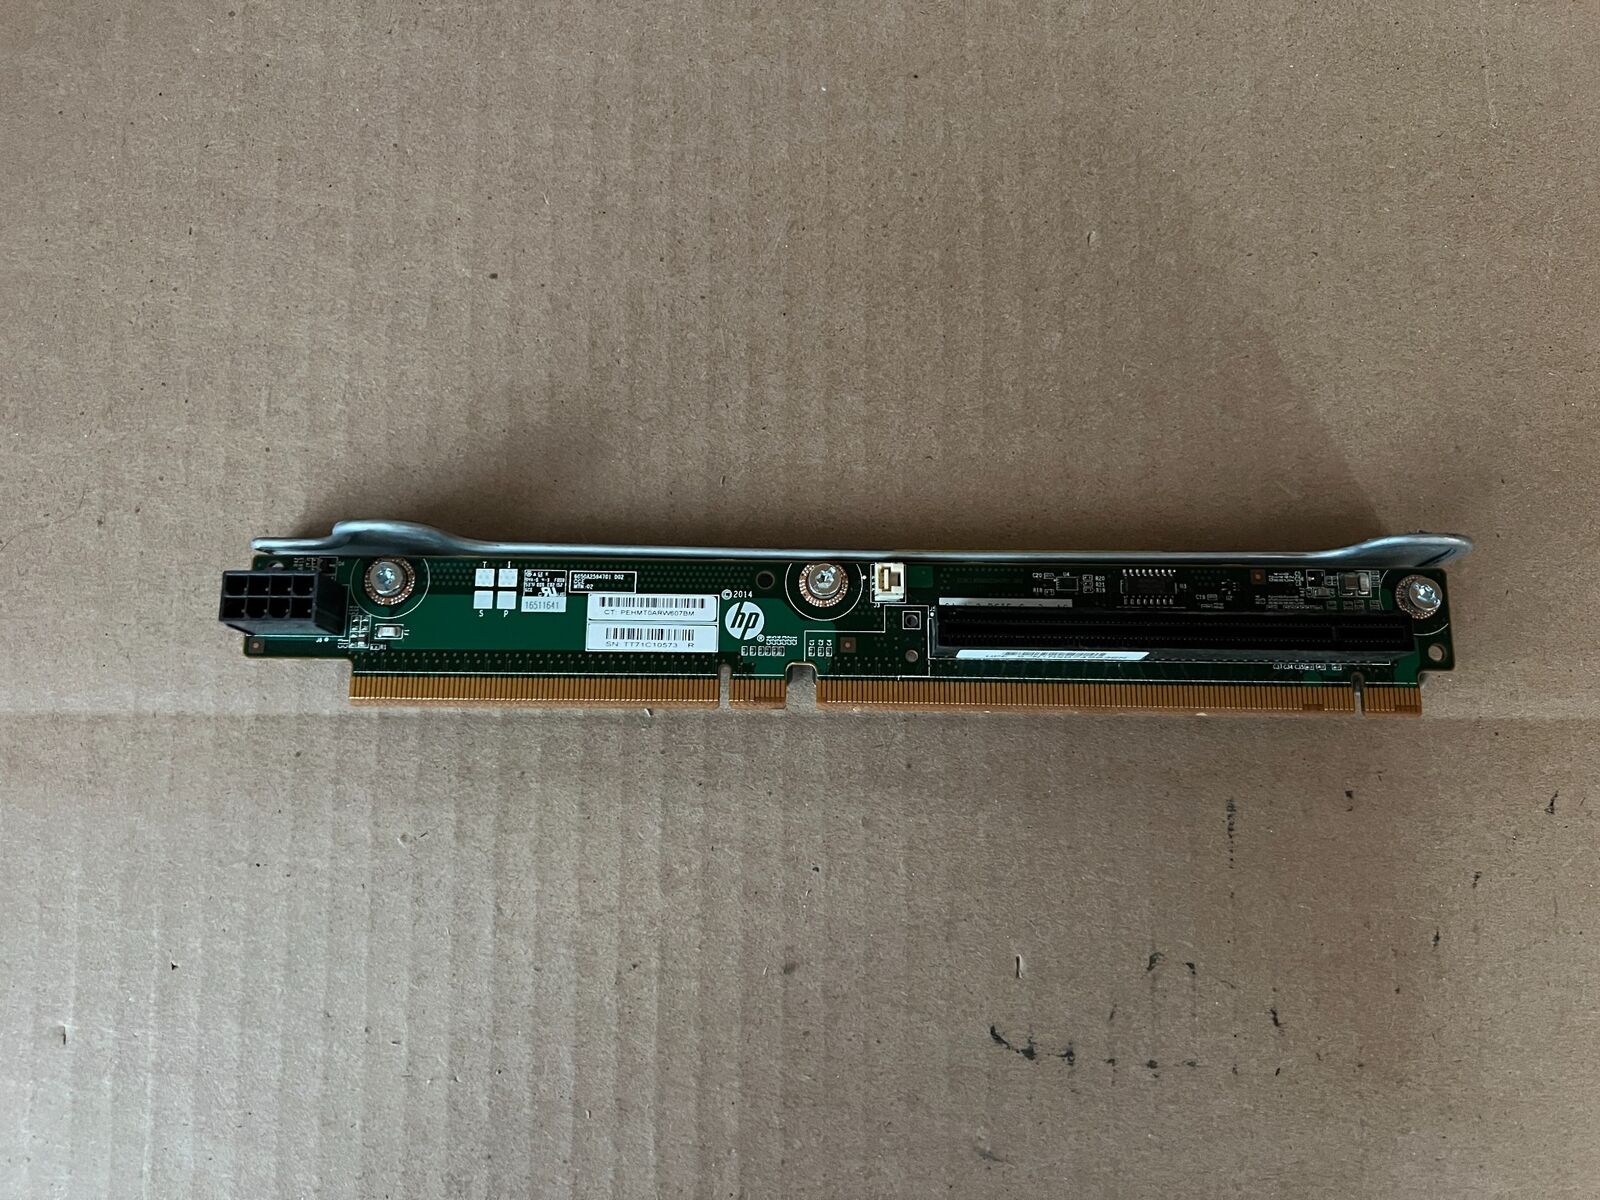 HPE 775419-001 DL360 GEN9 SECONDARY PCI RISER WITH BRACKET 779158-002 V3-1(4)